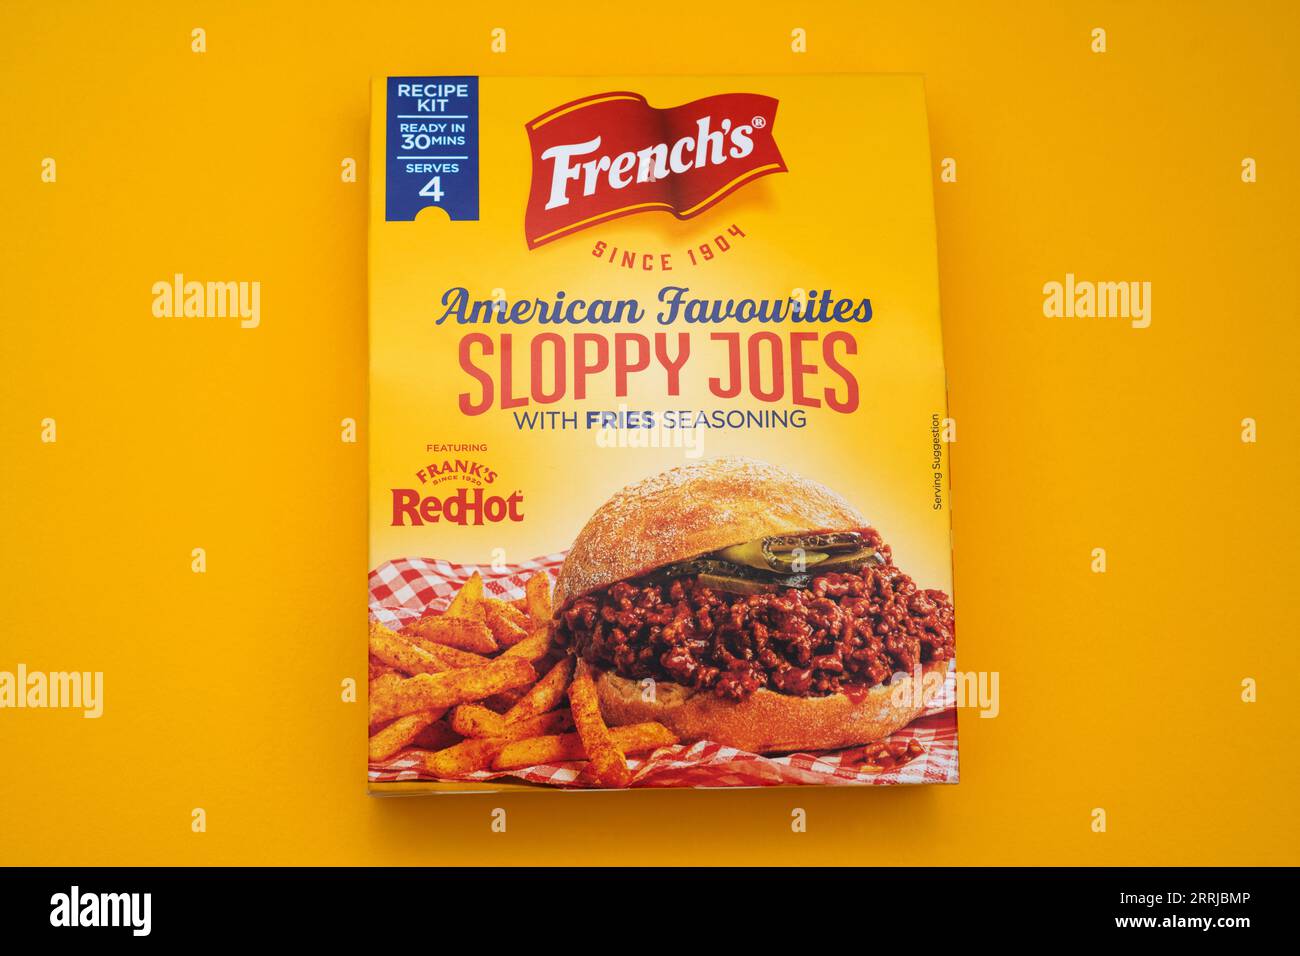 French's Sloppy Joes Rezept Mix Stockfoto